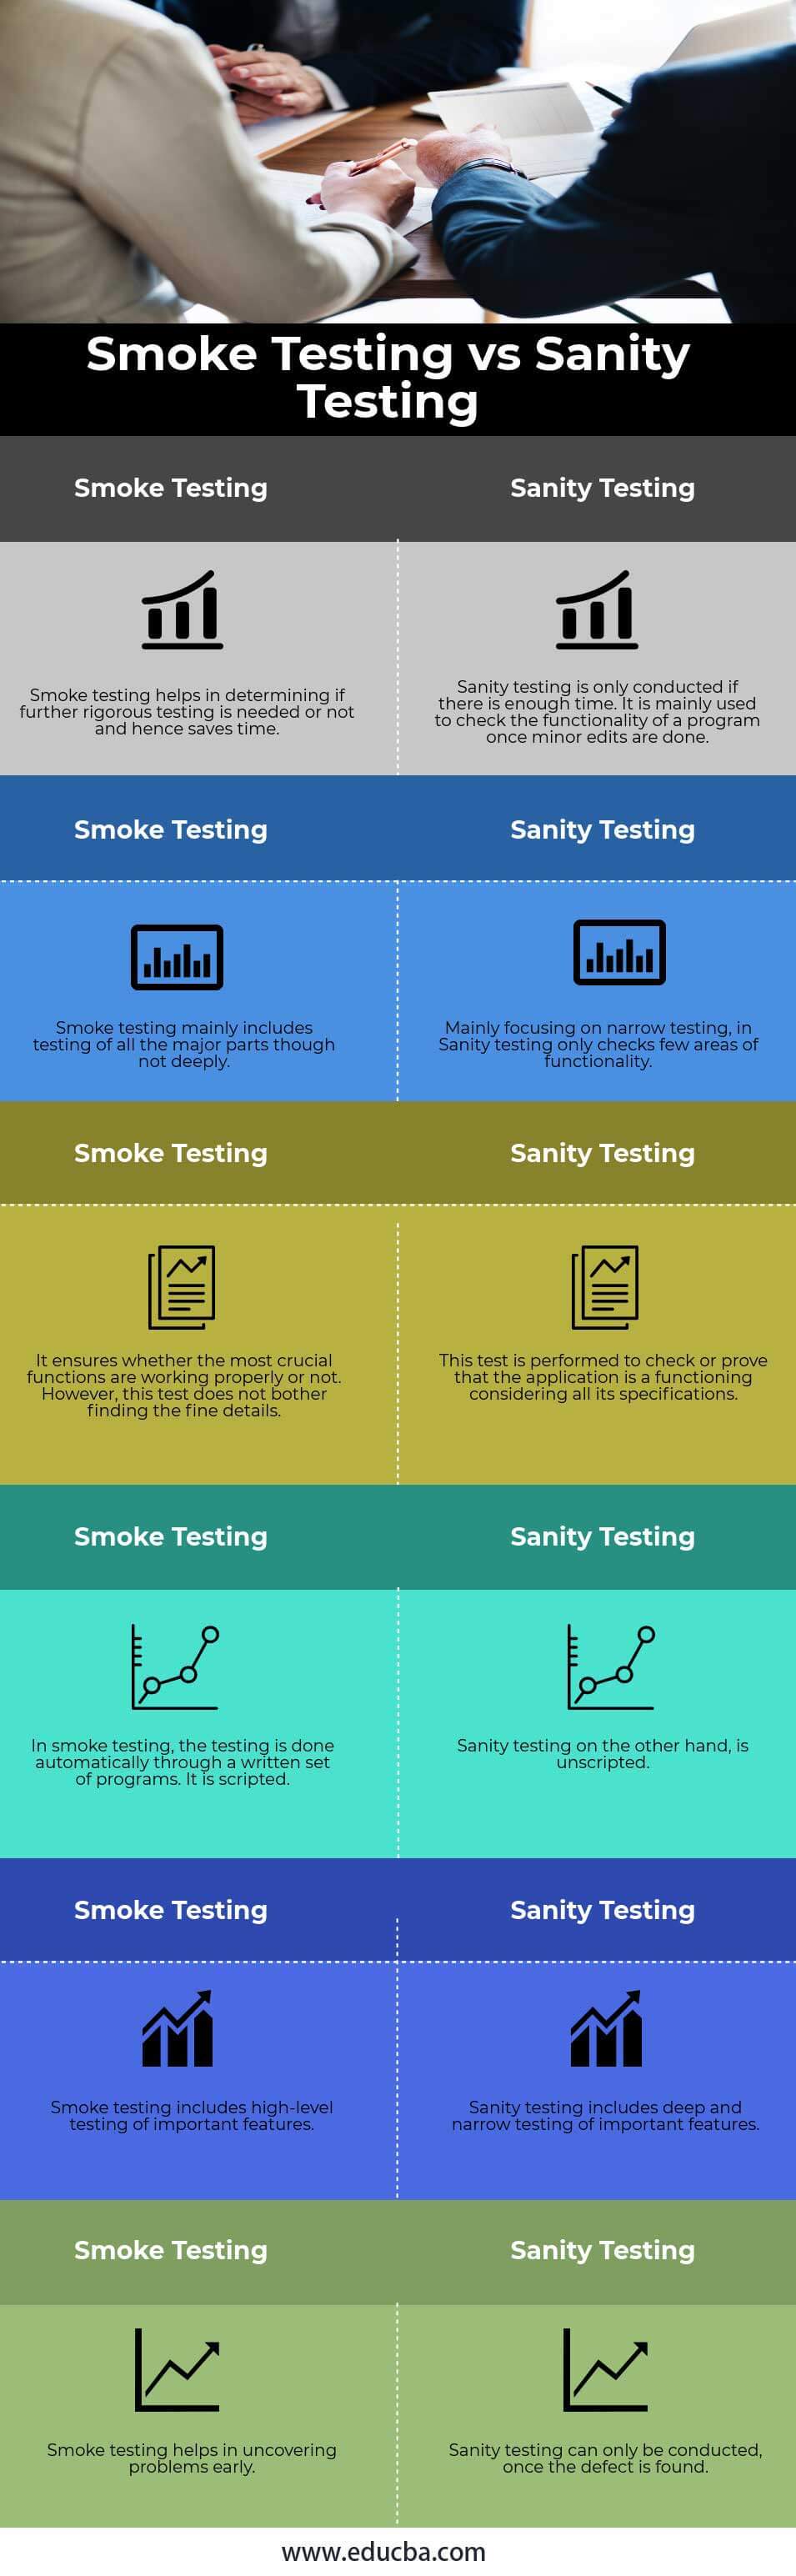 Smoke Testing vs Sanity Testing (info)